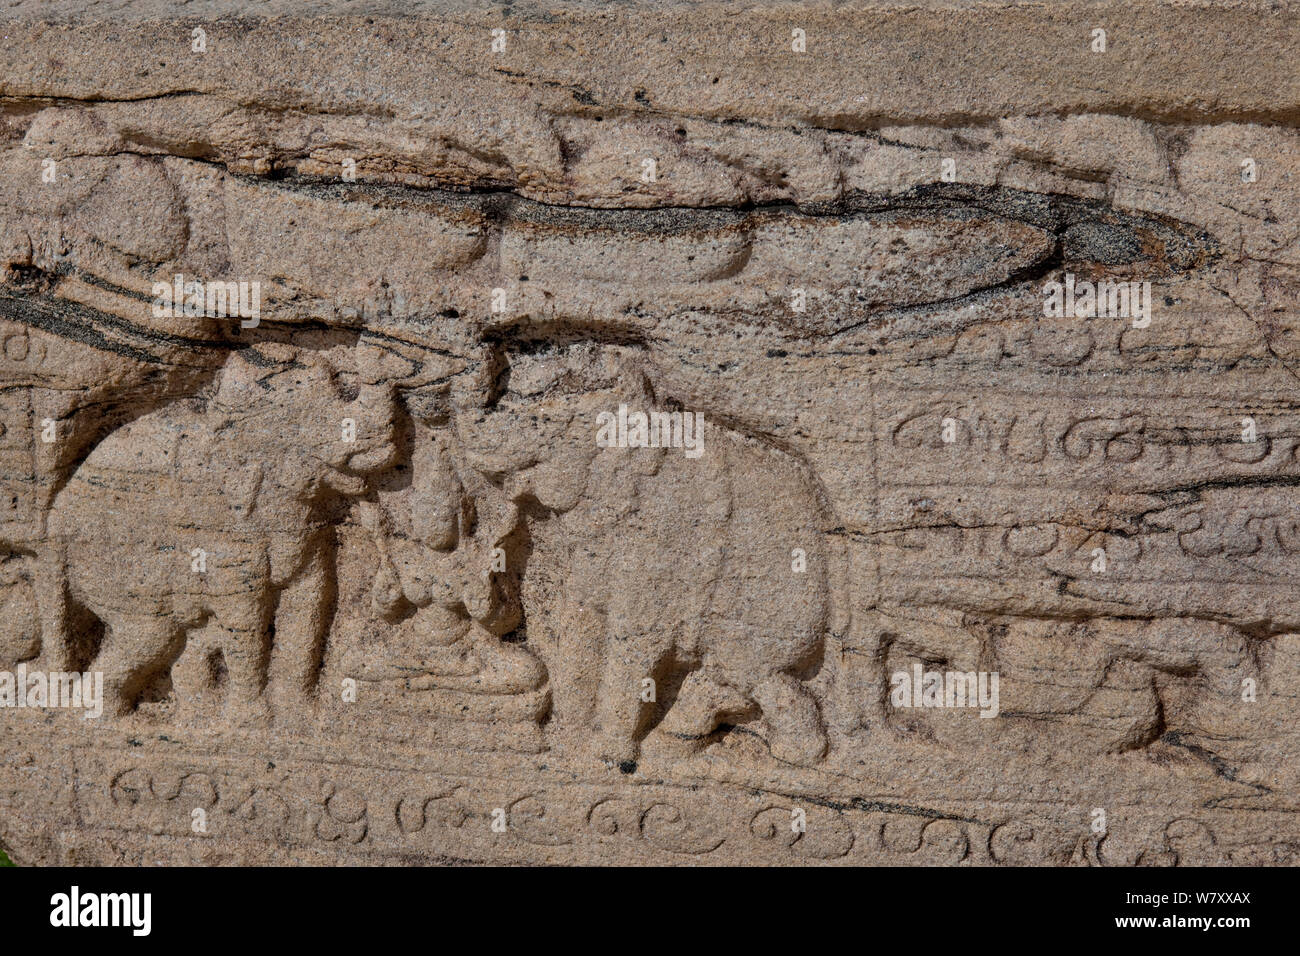 Elefanten im alten Blättern carving, polonnaruwa dargestellt, Sri Lanka. Stockfoto